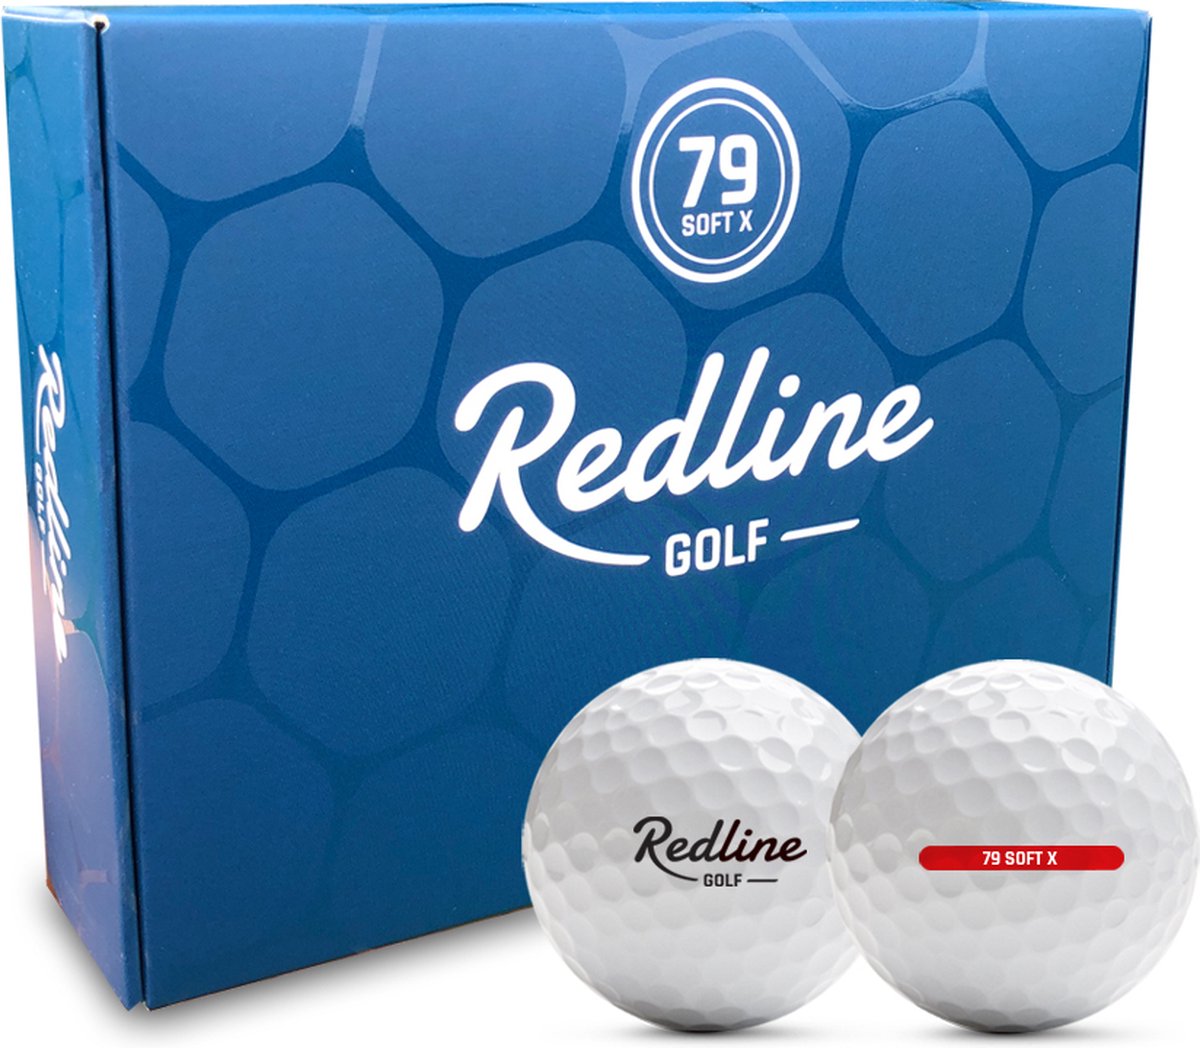 Redline 79 Soft X 3 dozijn